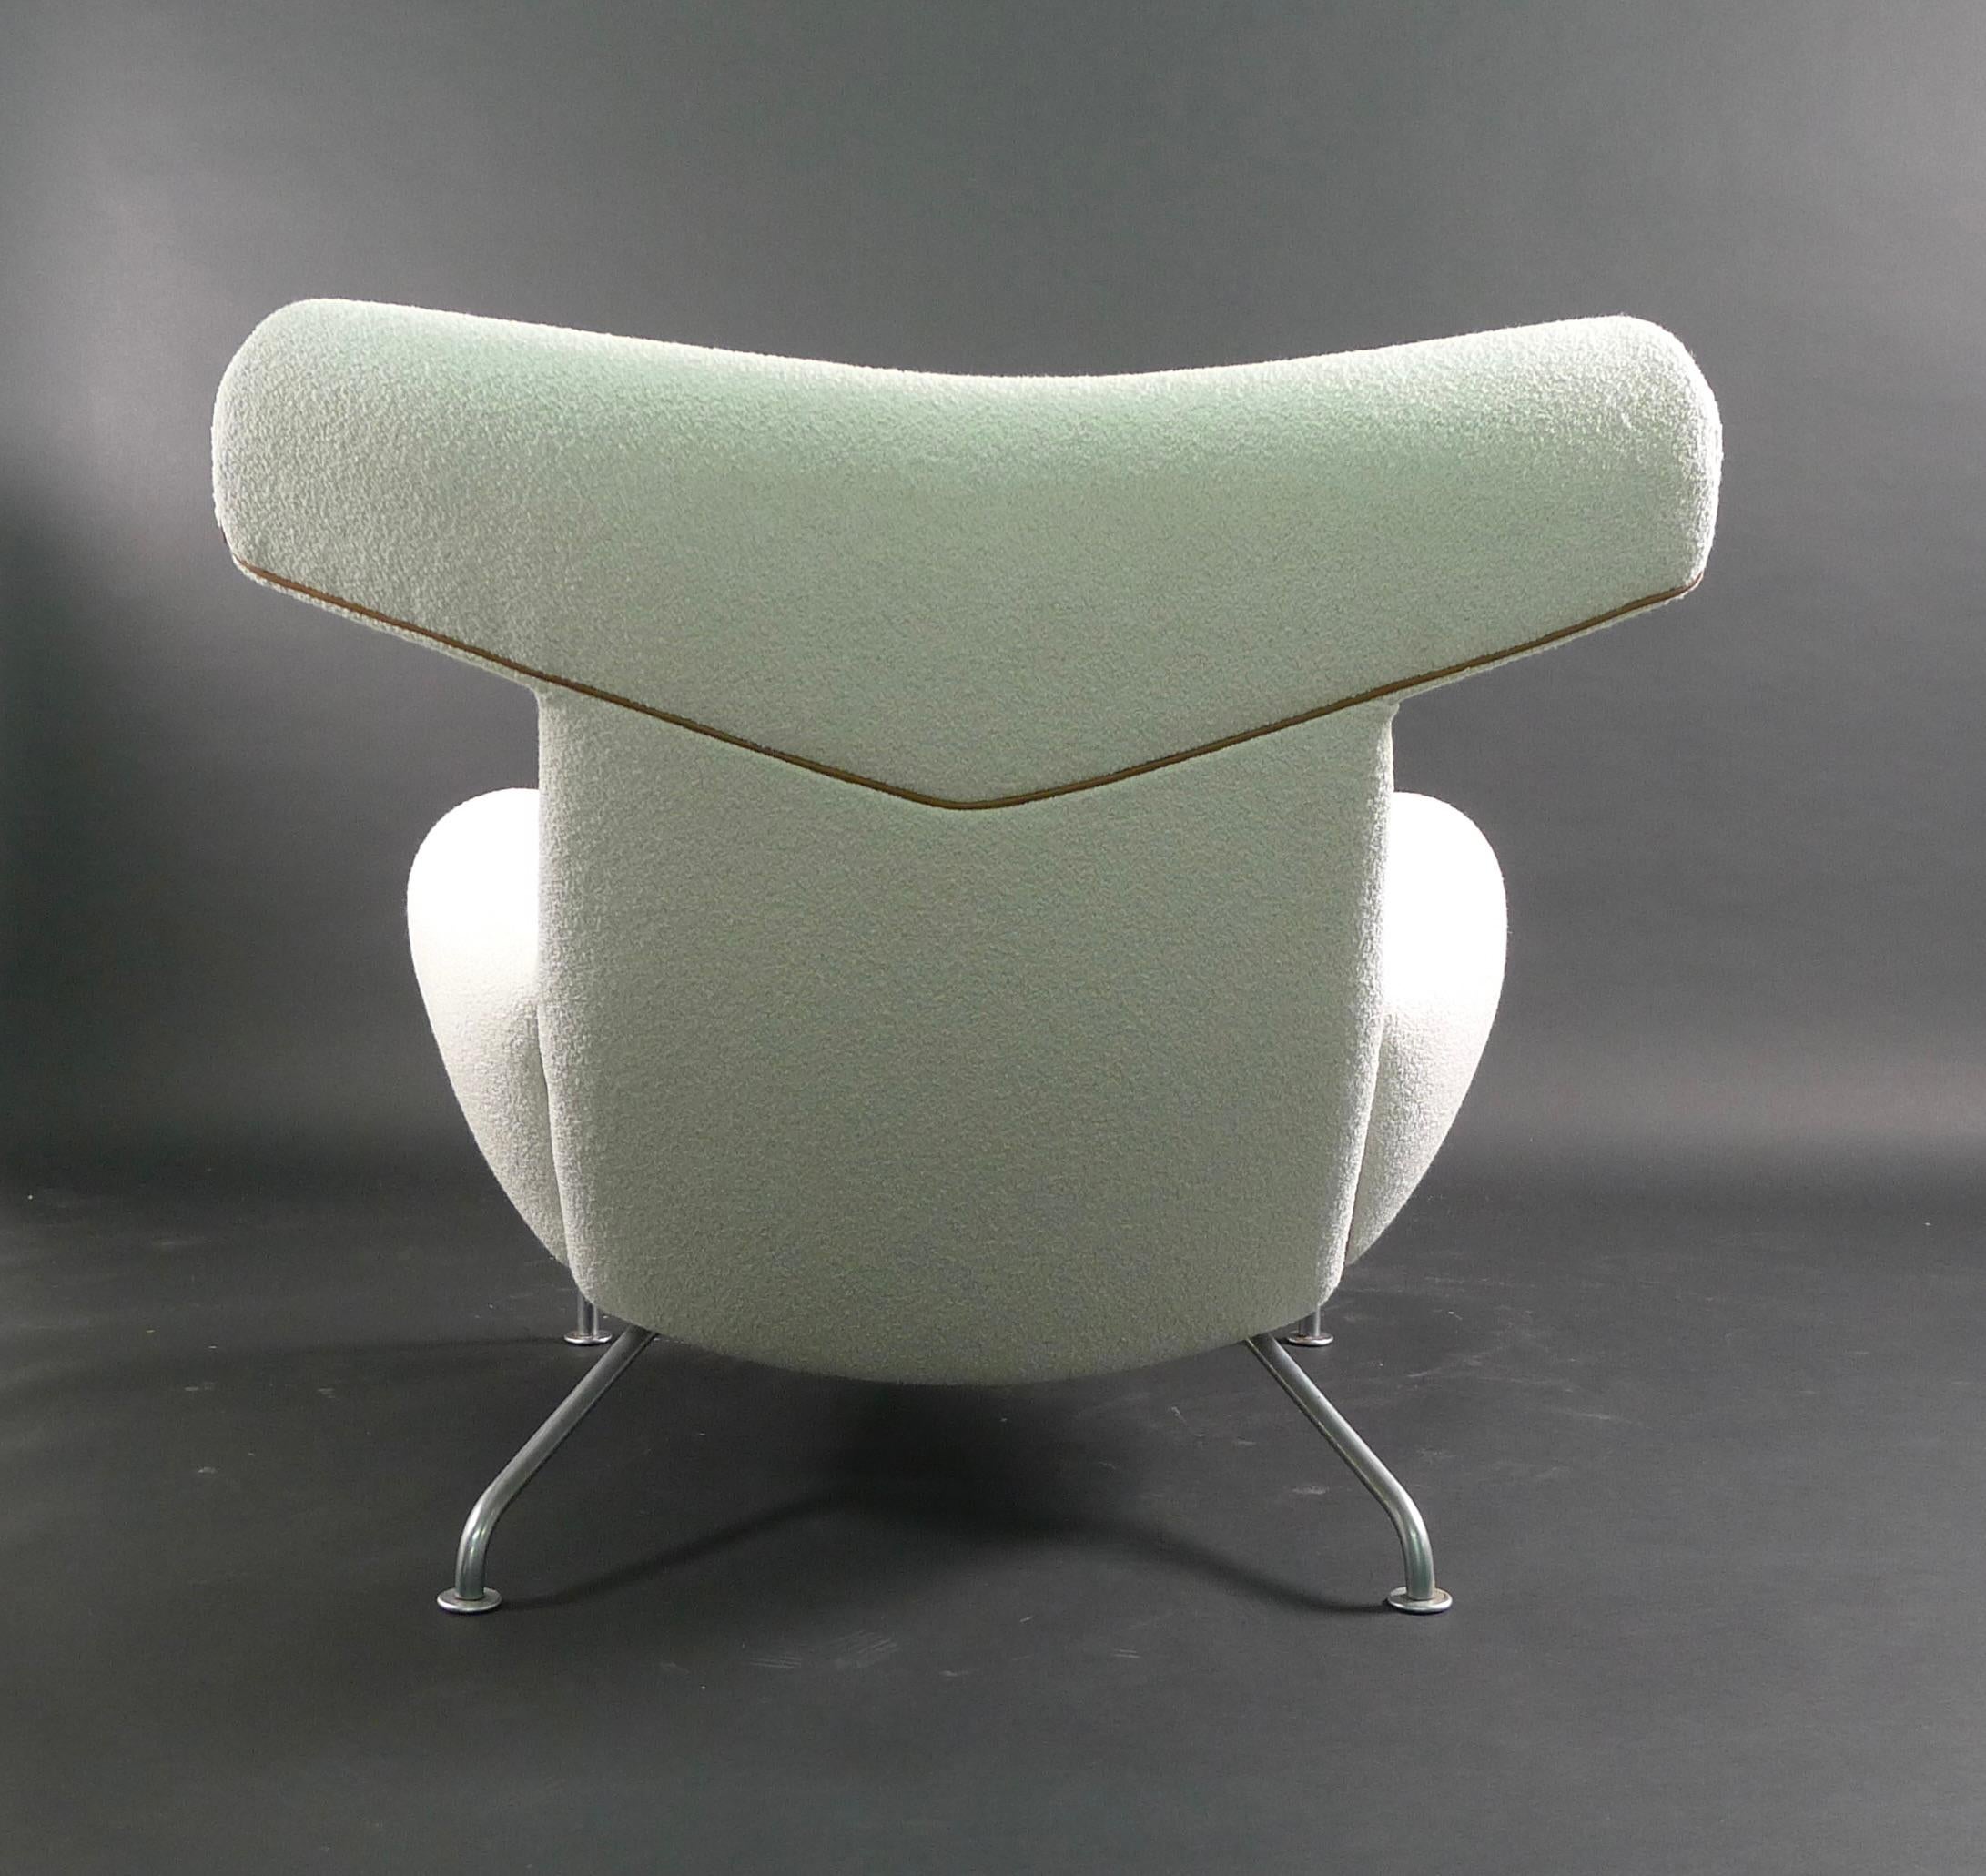 Hans Wegner, Ox Chair, Model Ap-46, Designed 1960, Made by Ap Stolen, Copenhagen 1